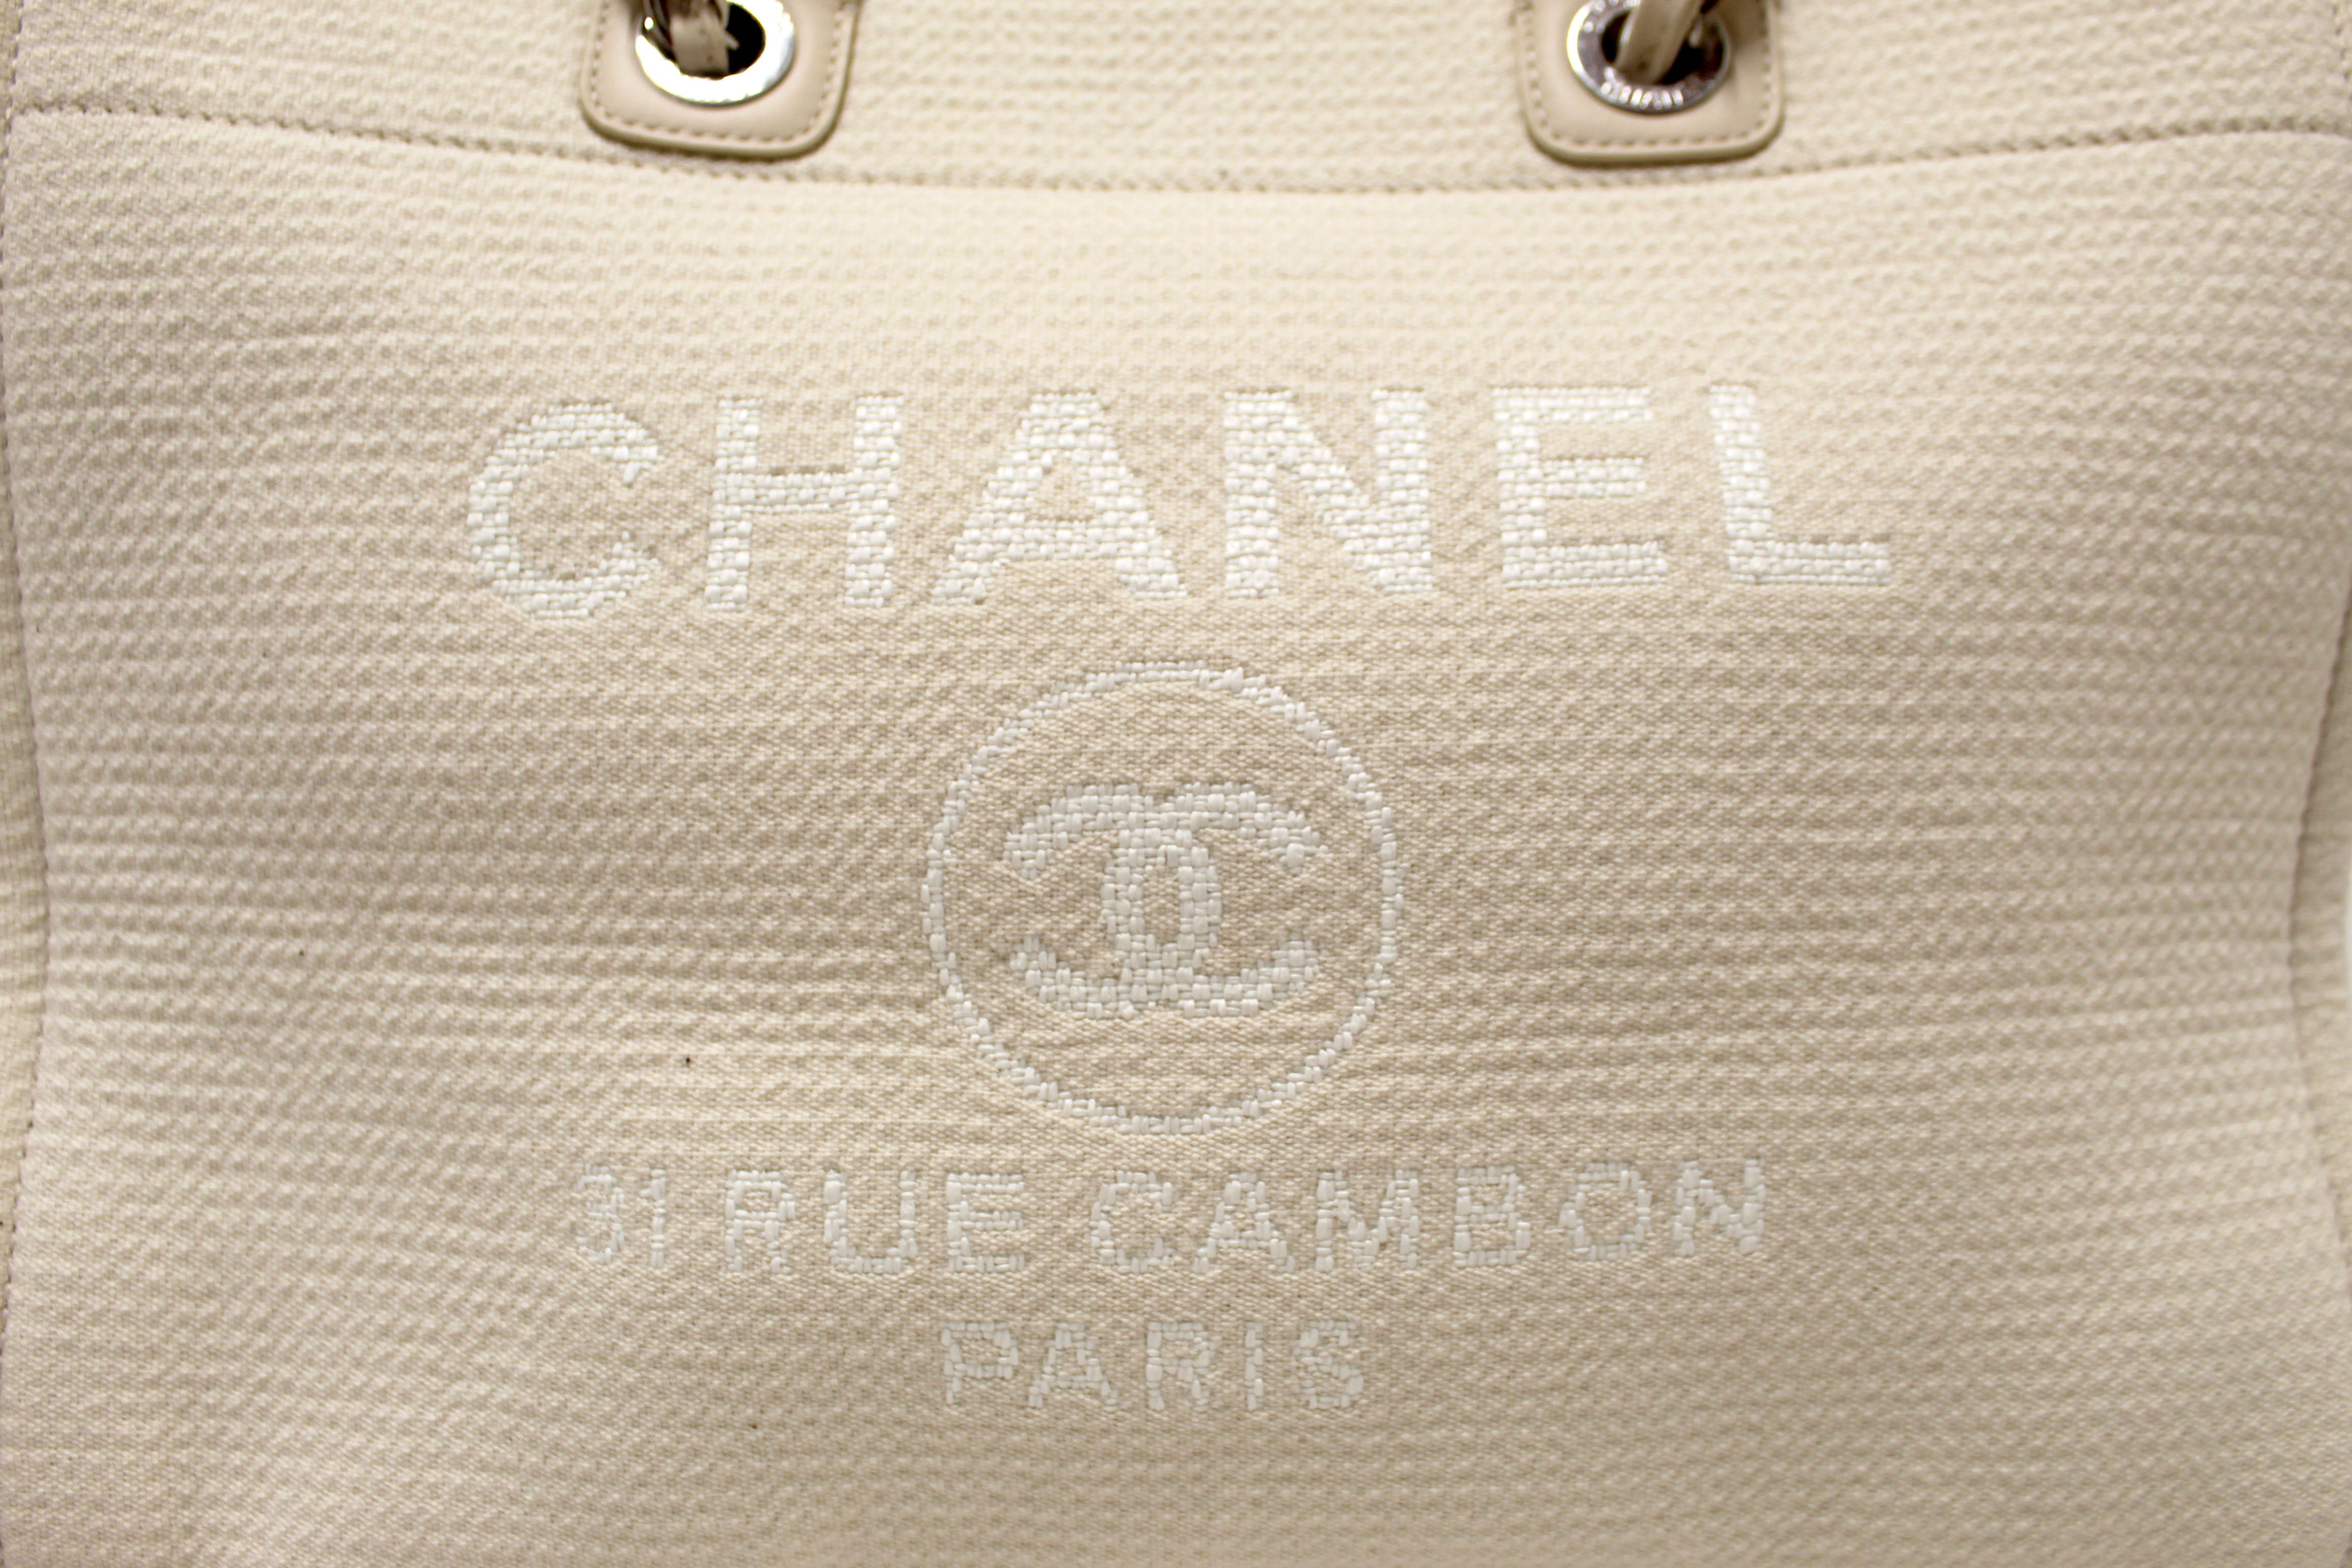 Authentic Chanel White Mixed Fibers Maxi Deauville Shopper Tote Bag